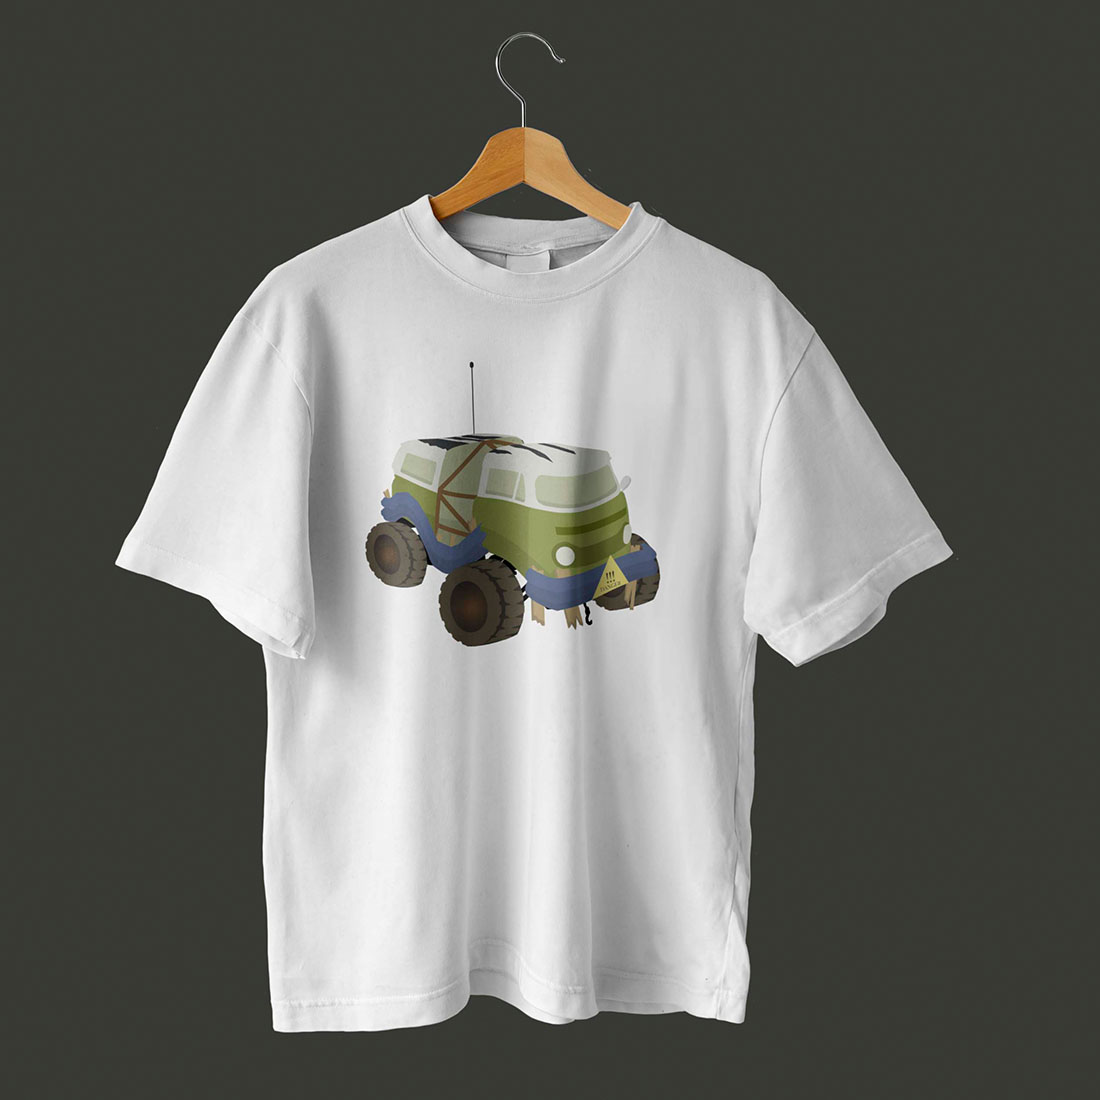 Amazing Car Illustration T-Shirt Design cover image.